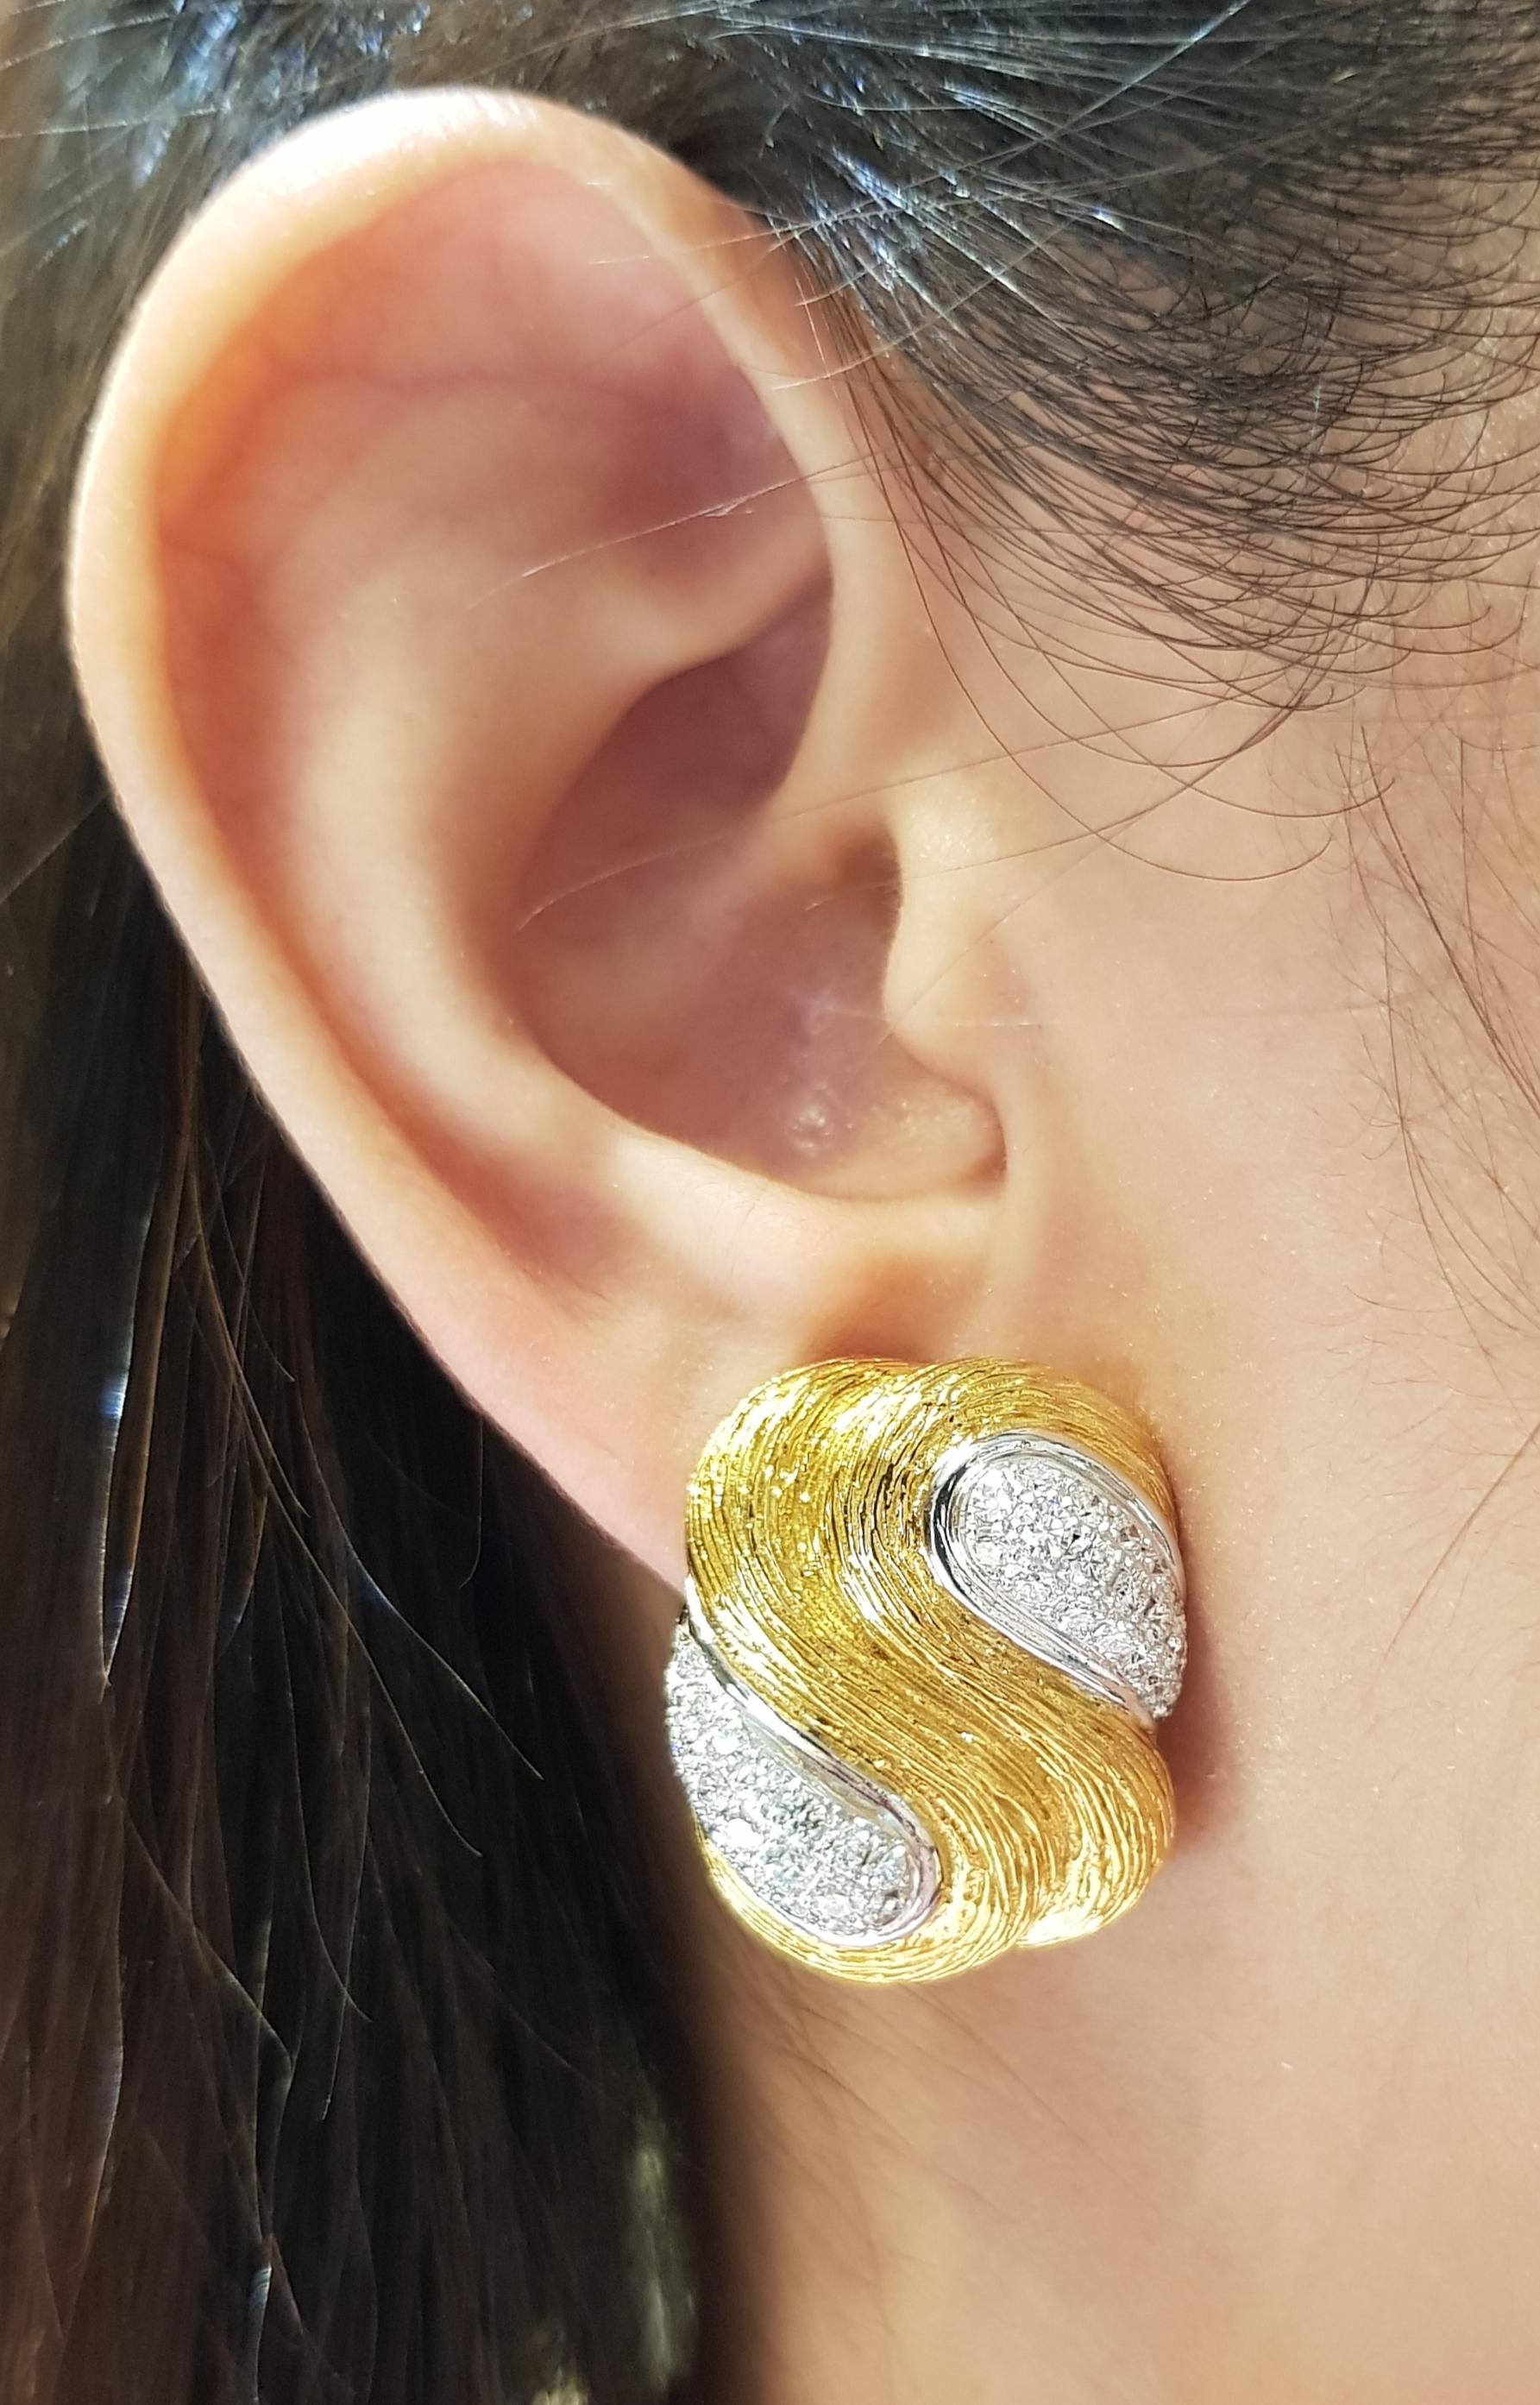 Diamond 1.74 carats Earrings set in 18 Karat Gold Settings

Width:  2.0 cm 
Length:  2.5 cm
Total Weight: 21.75 grams

